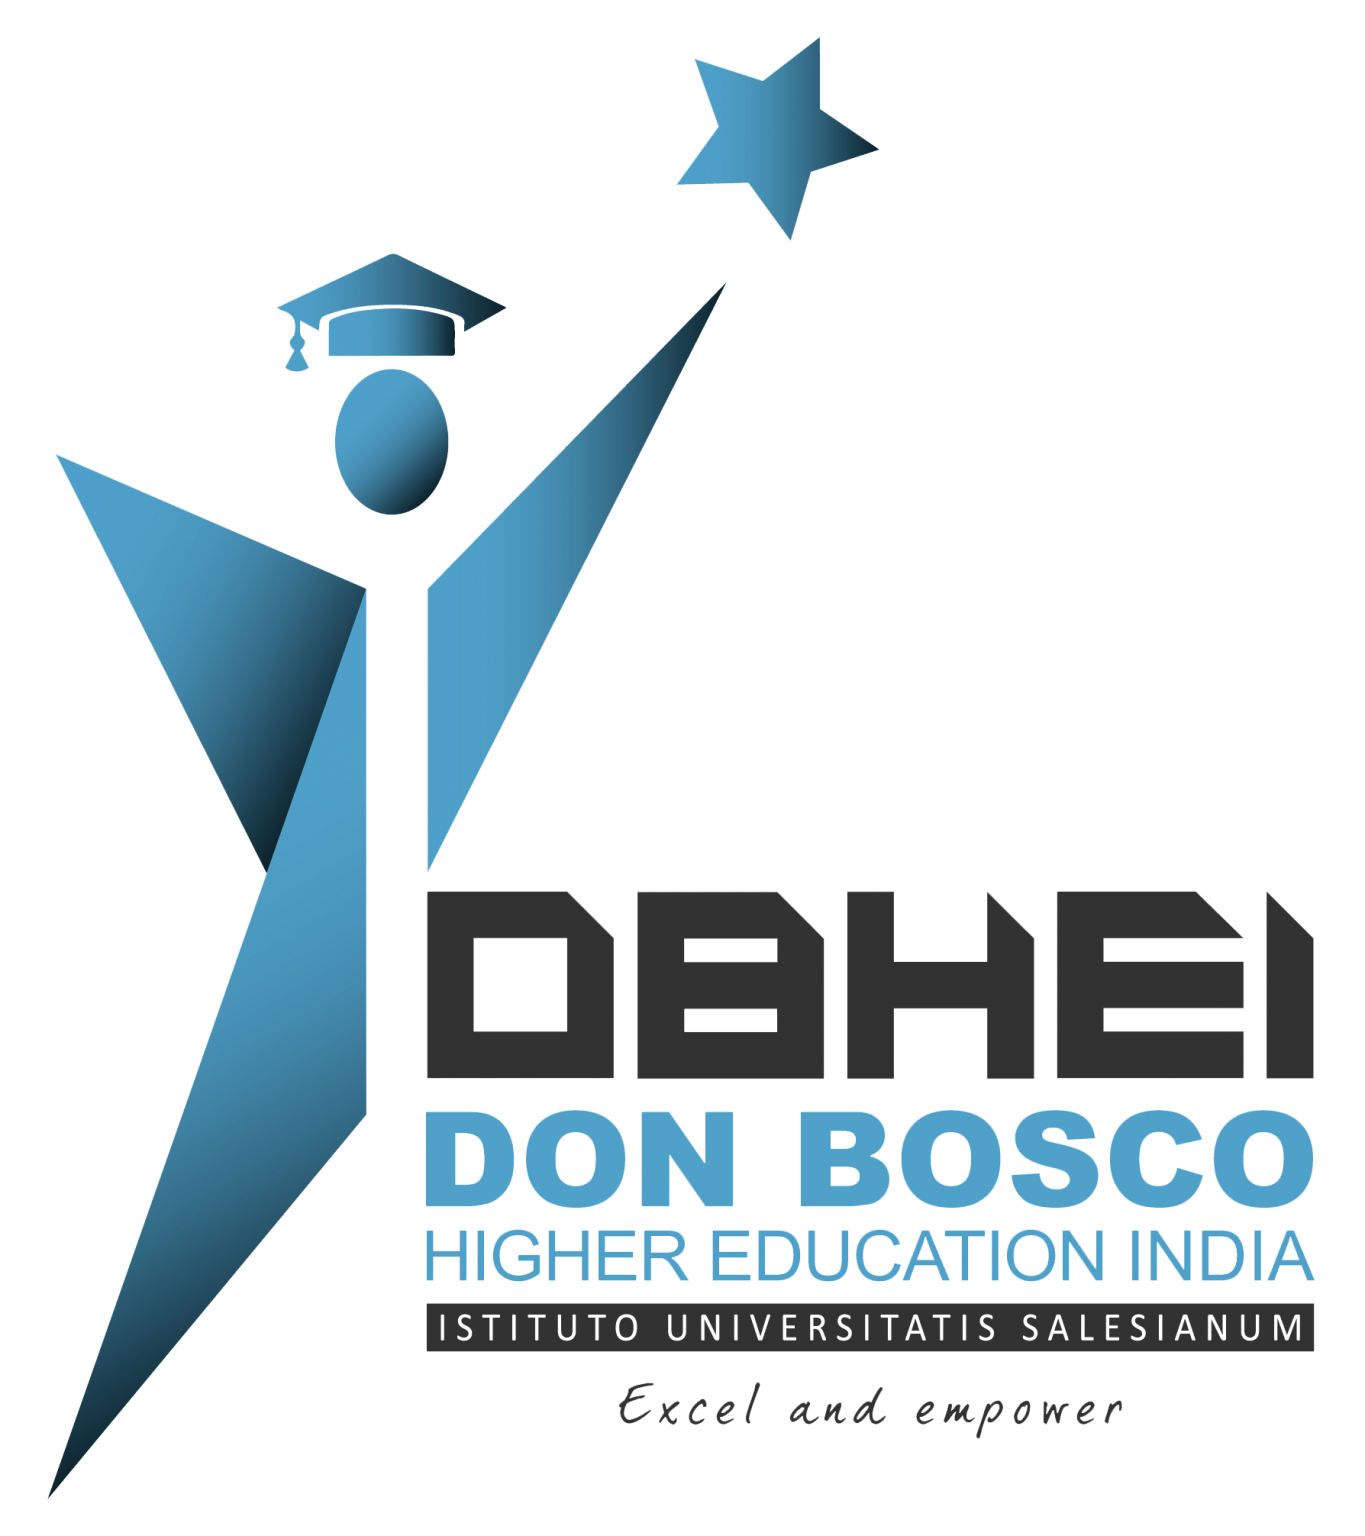 Don Bosco Higher Education India (DBHEI)